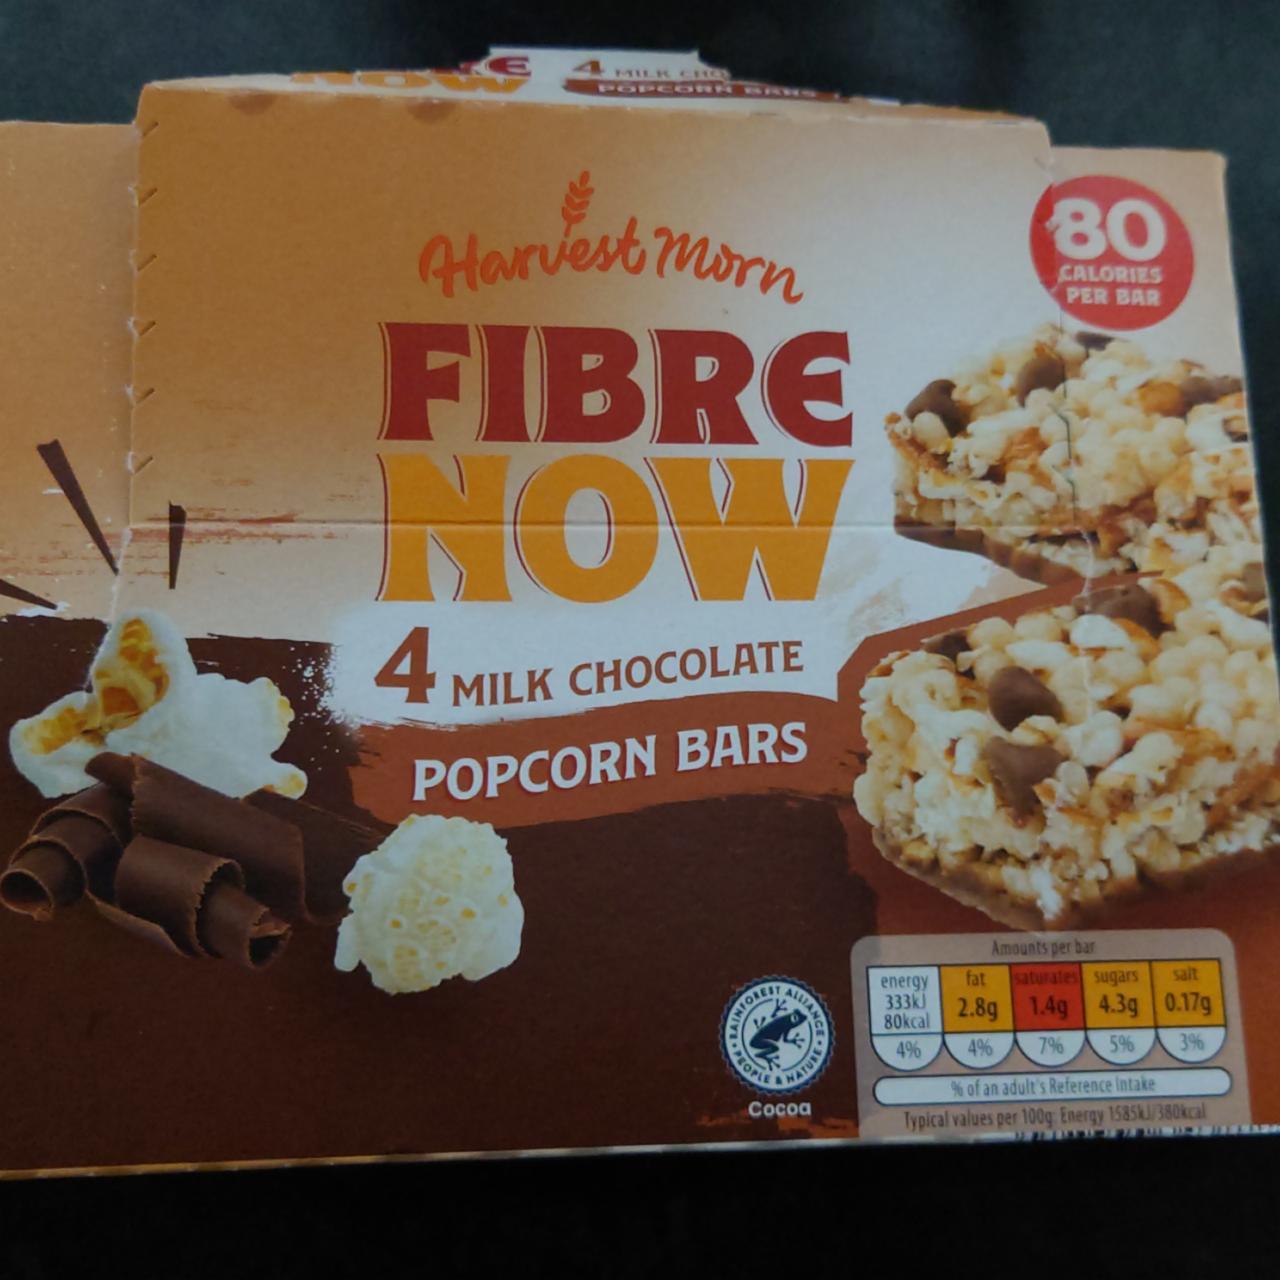 Fotografie - Fibre now Milk chocolate Popcorn bars Harvest Morn